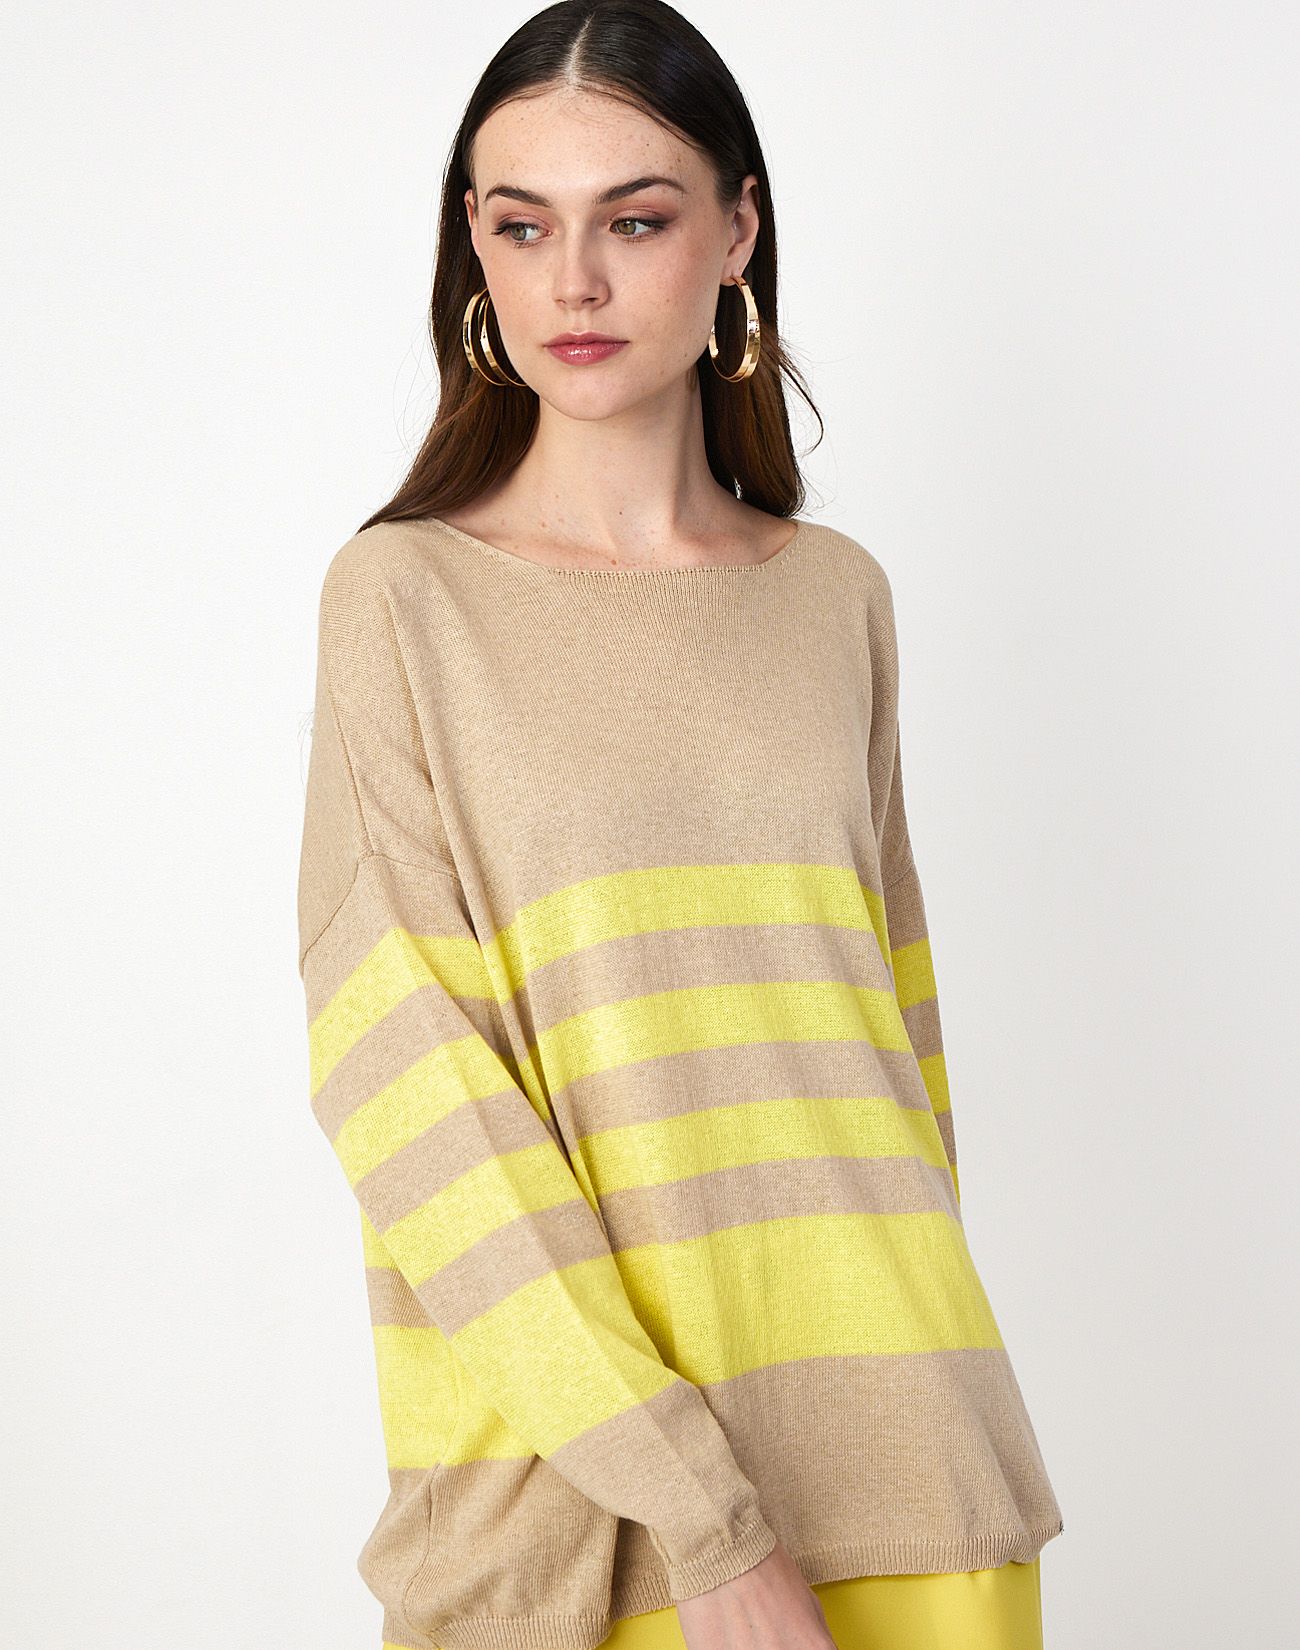 Striped knit top